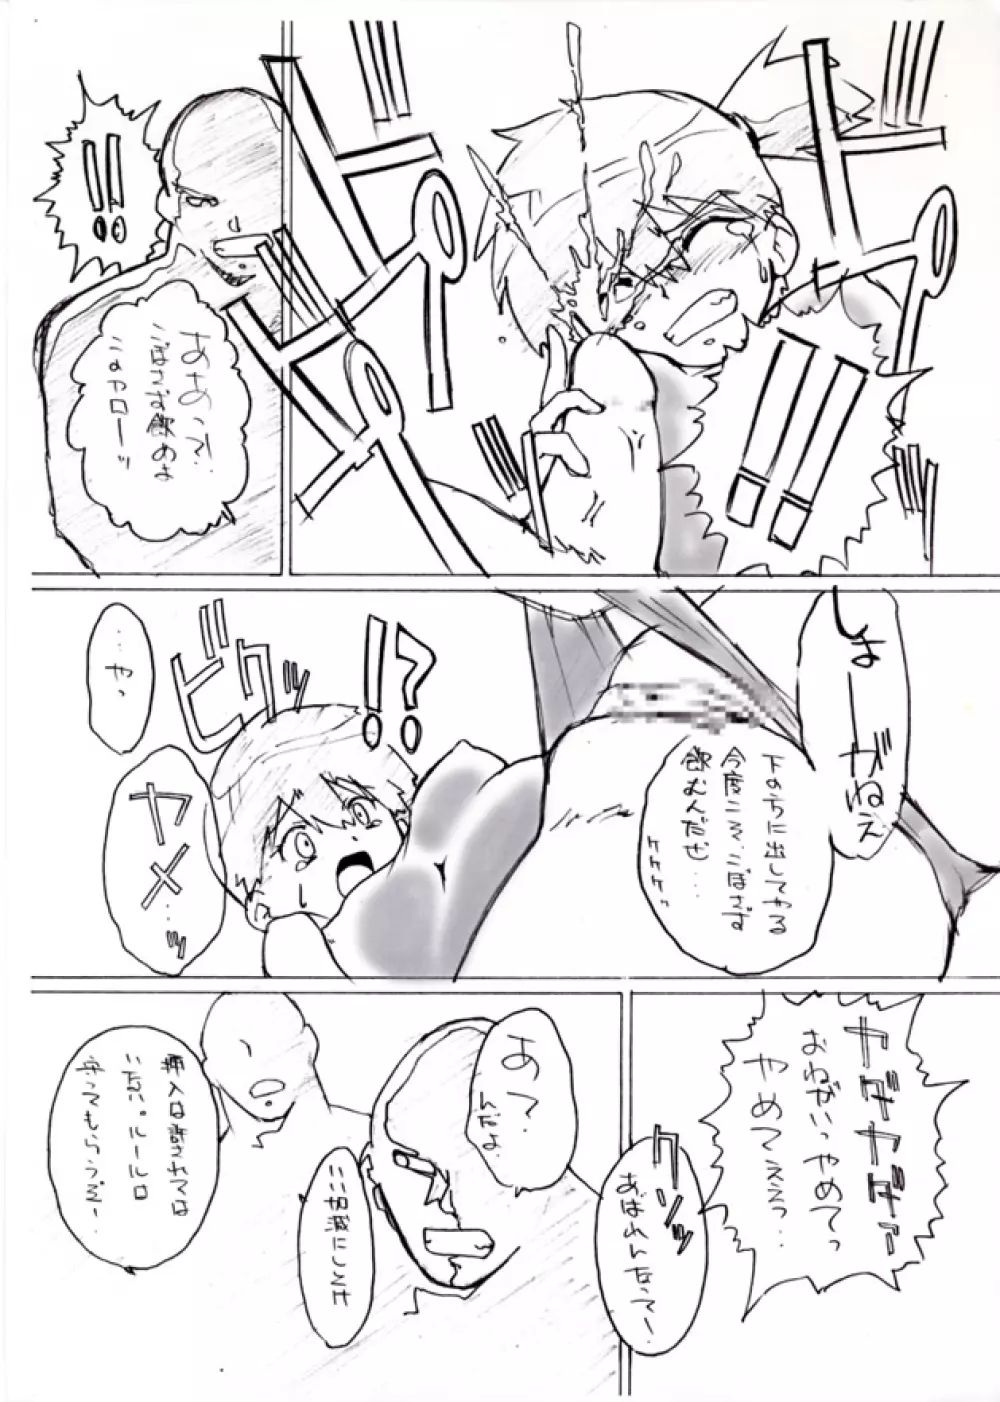 KASUMIX XPLOSION Kasumi Comic part5 - page8